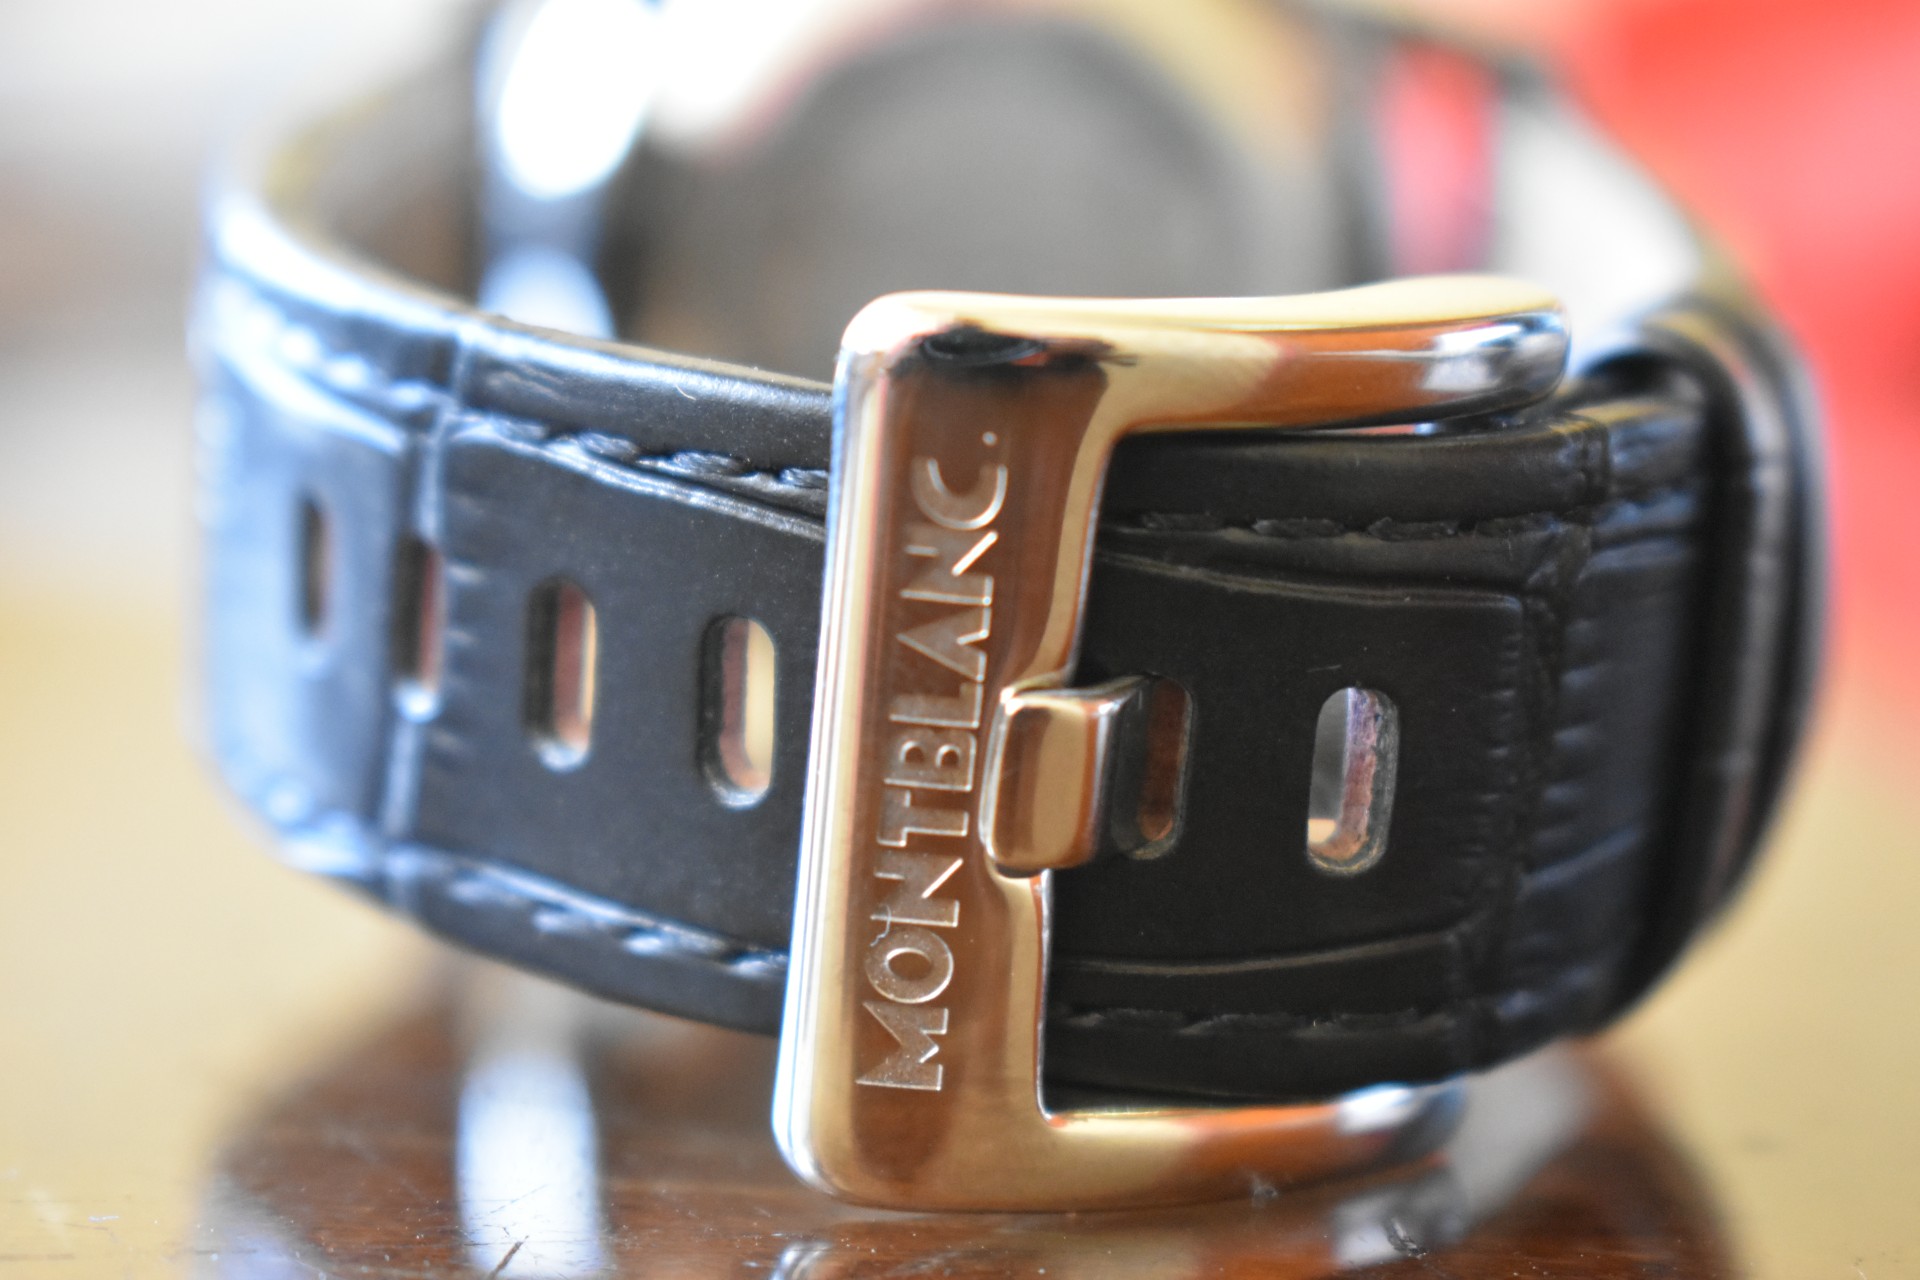 Montblanc Time walker Chronograph Watch For Sale in Nairobi,Kenya.